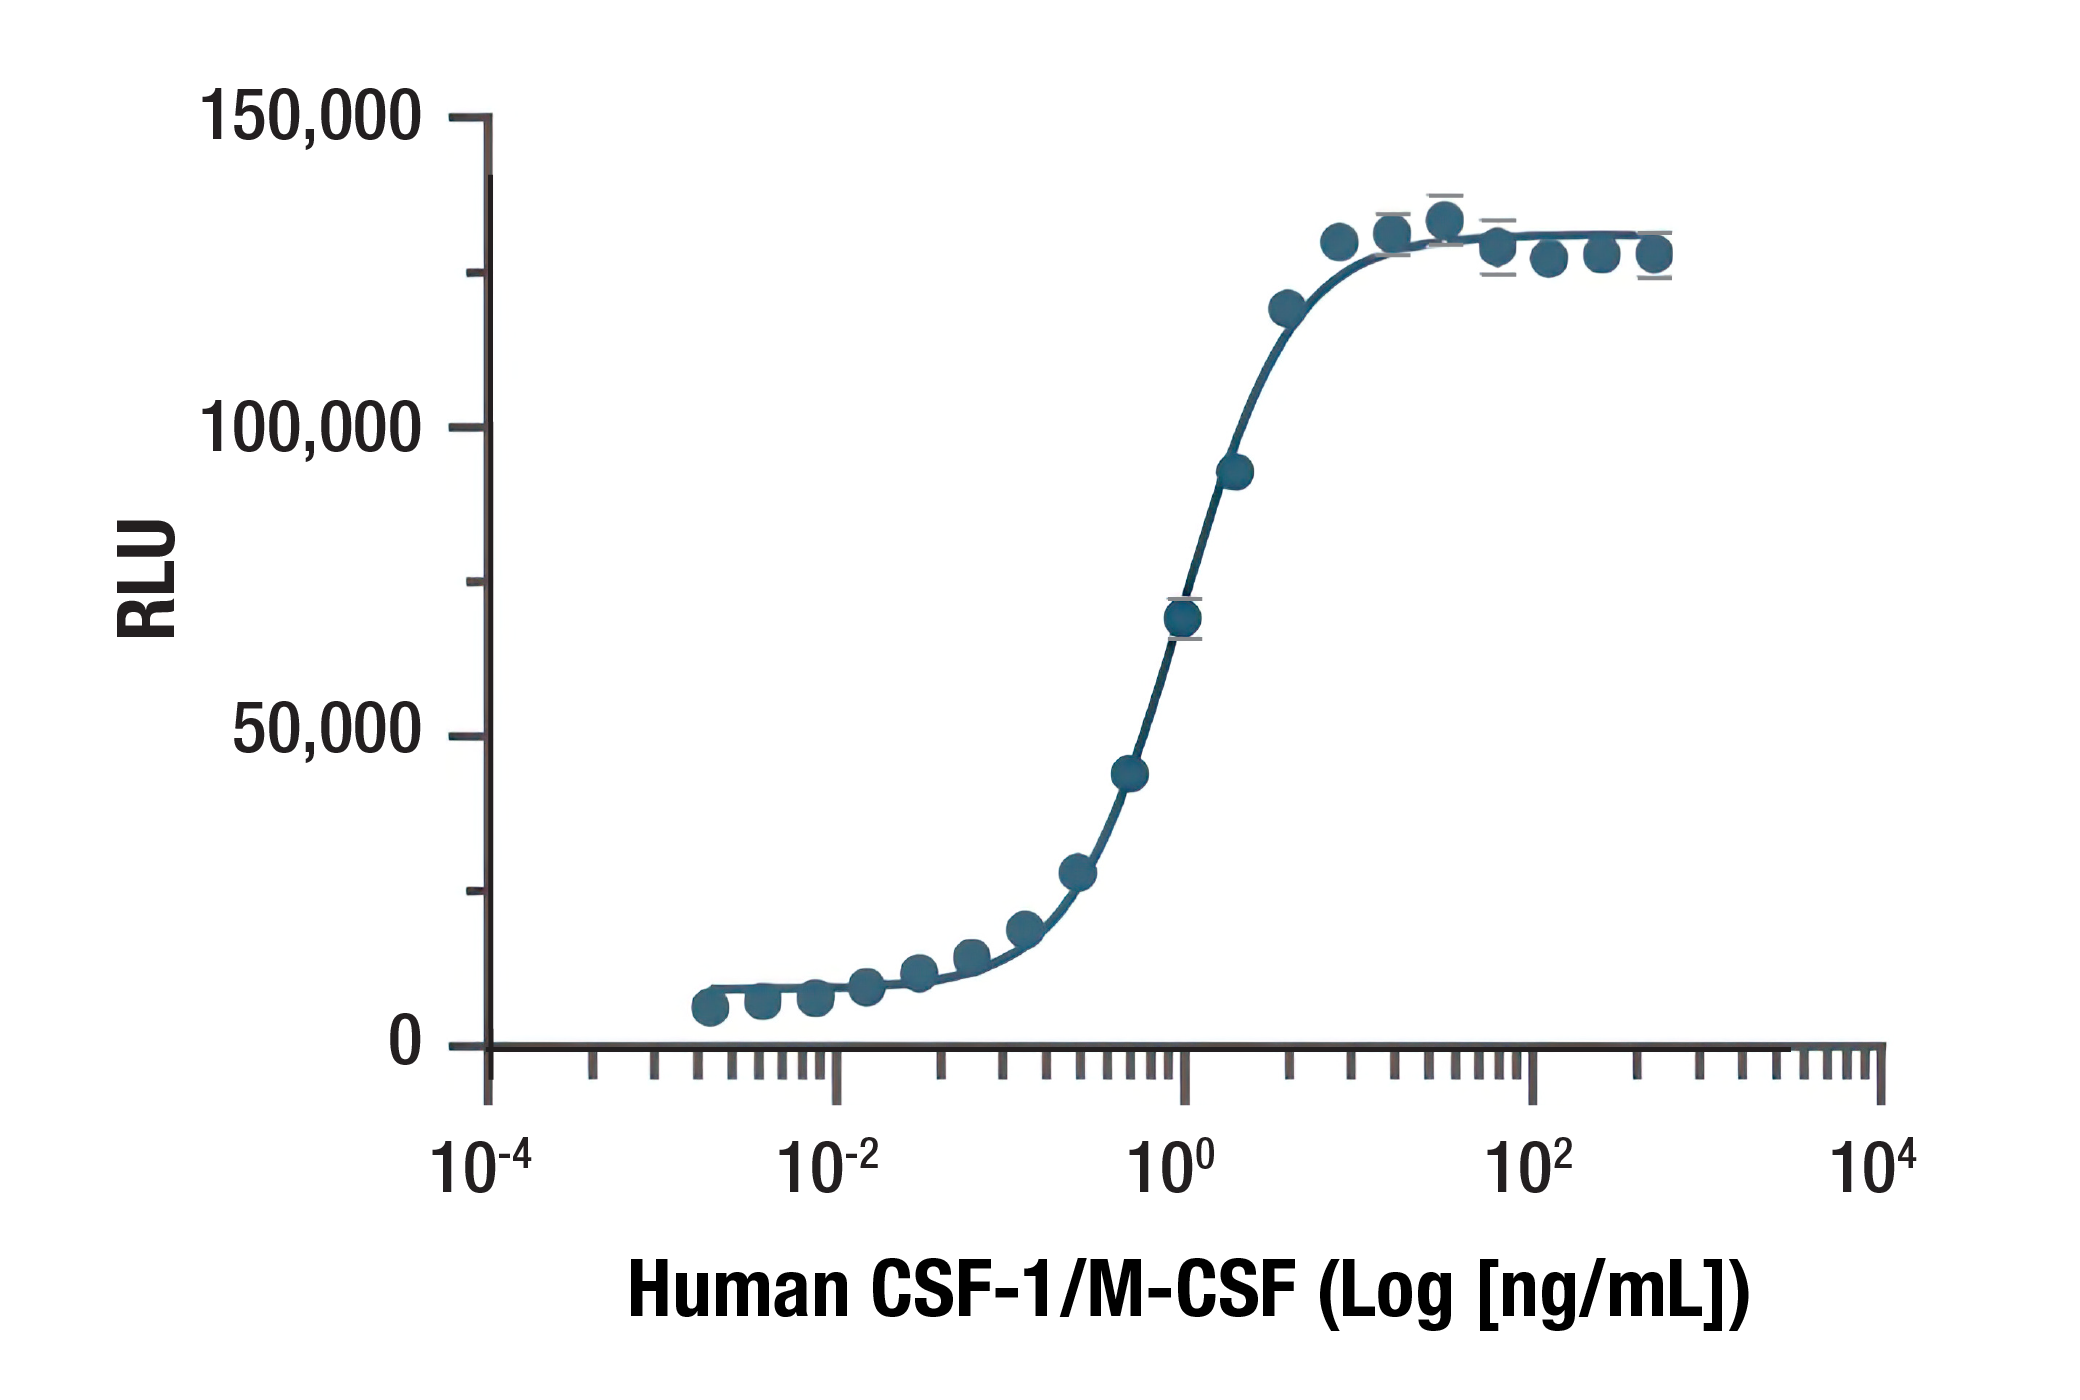  Image 1: Human CSF-1/M-CSF Recombinant Protein